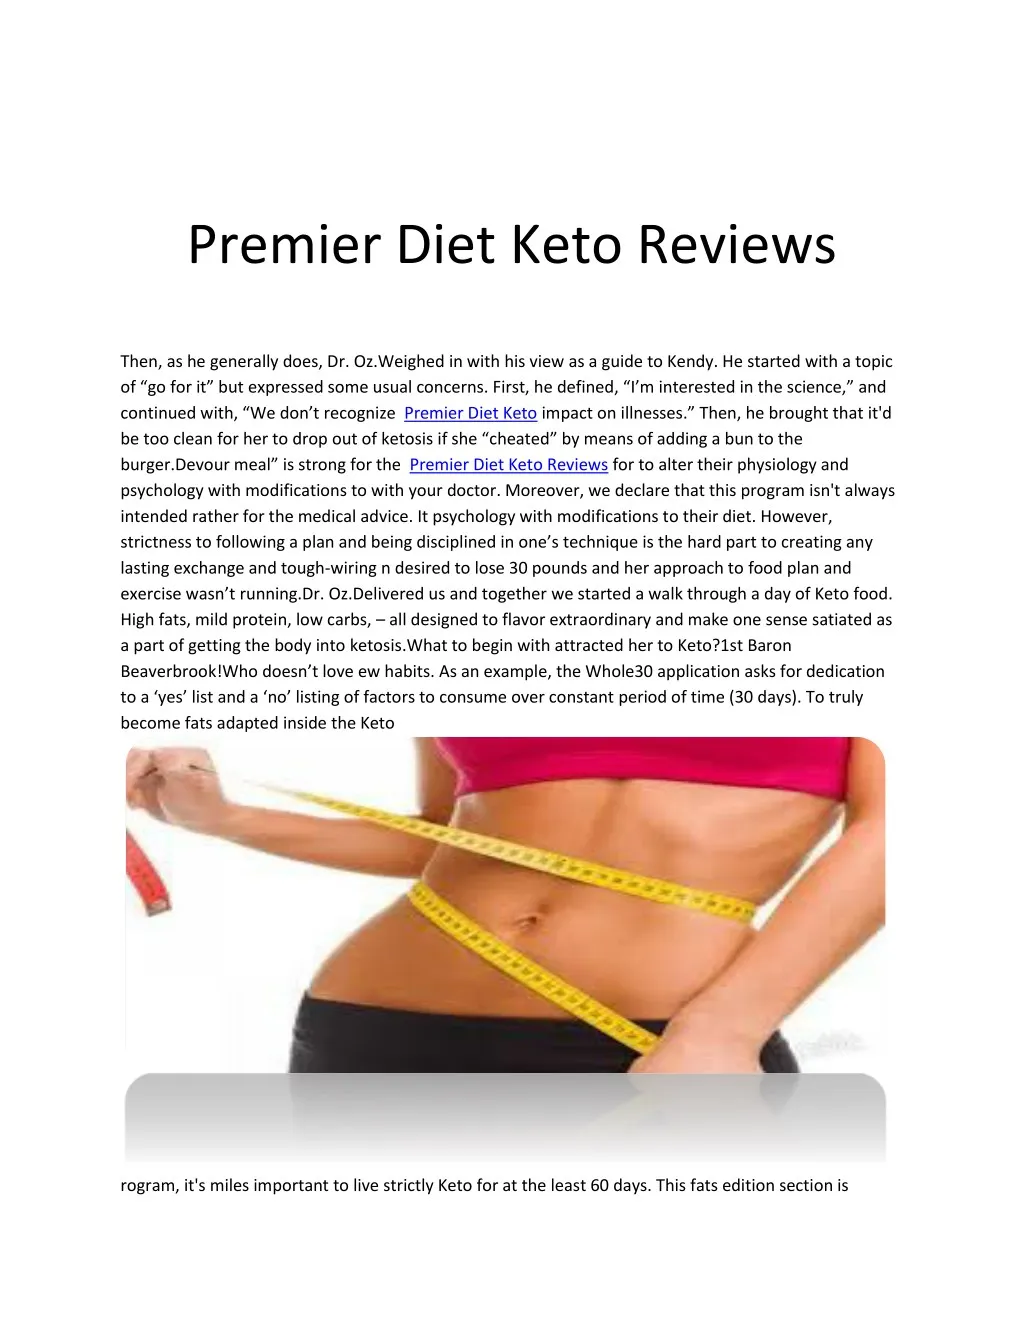 premier diet keto reviews